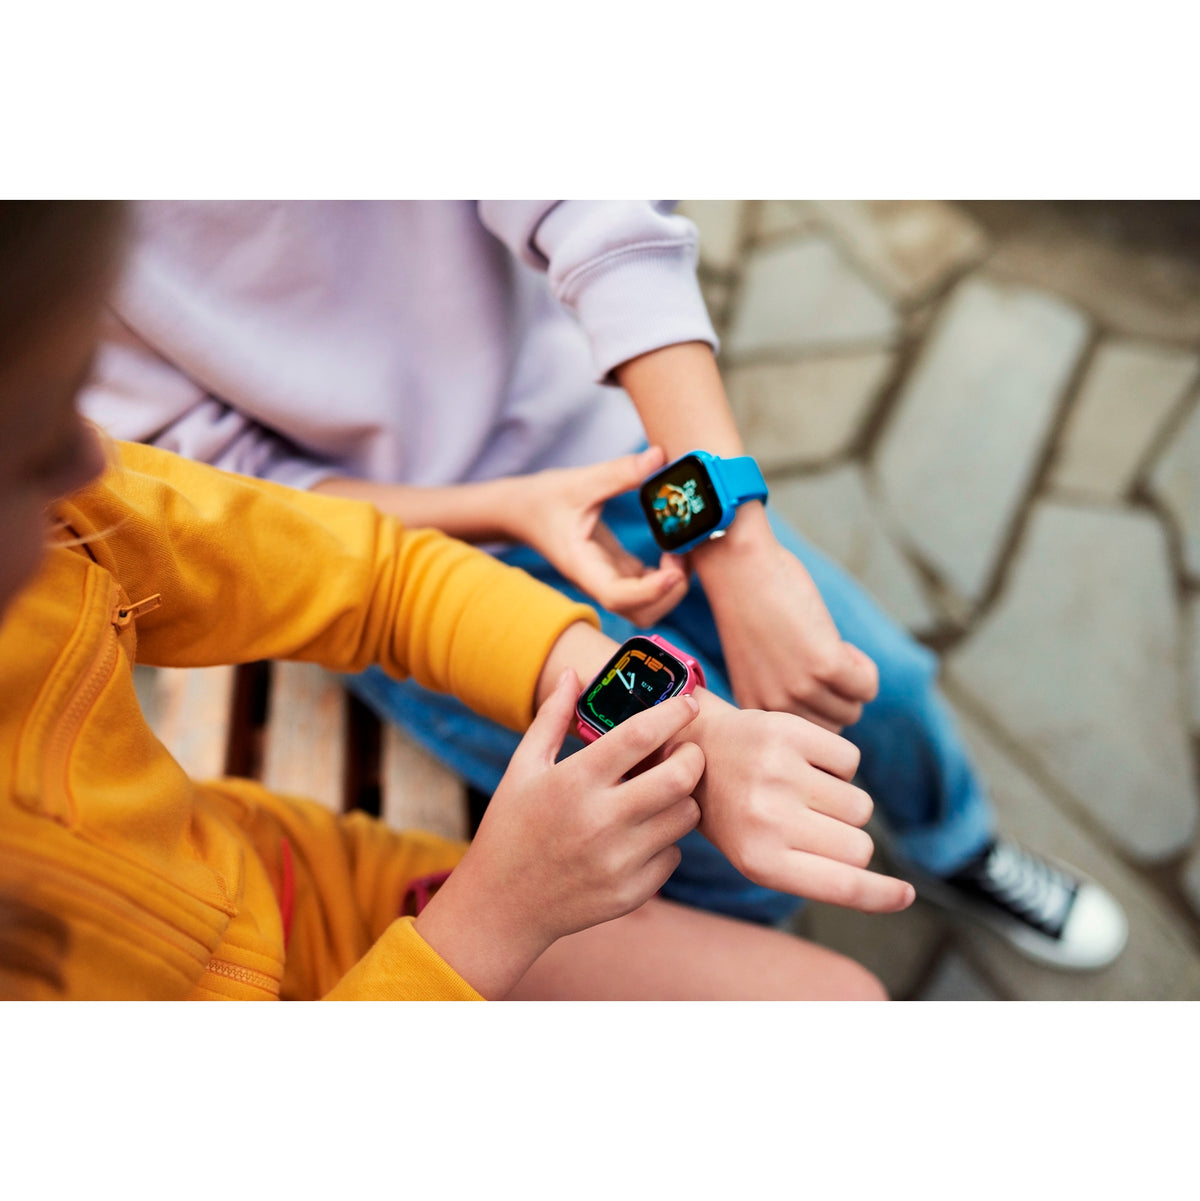 Detské smart hodinky Maxcom FIT FW59, GPS tracking, modrá